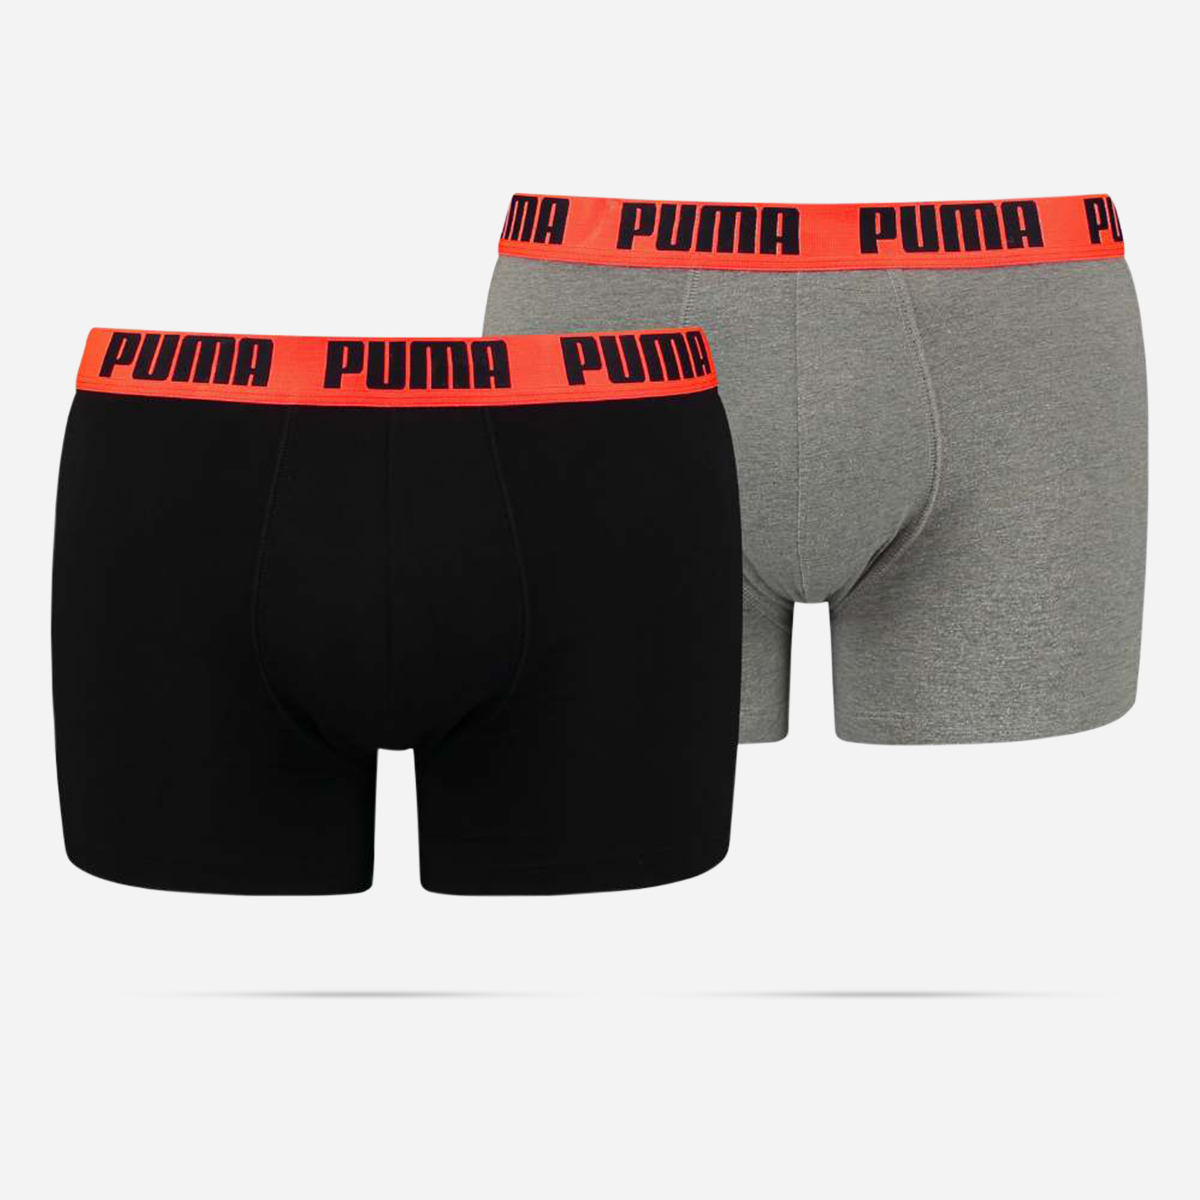 Willen twintig prieel Puma Bodywear Basic Boxer 2-pack | L | 340356